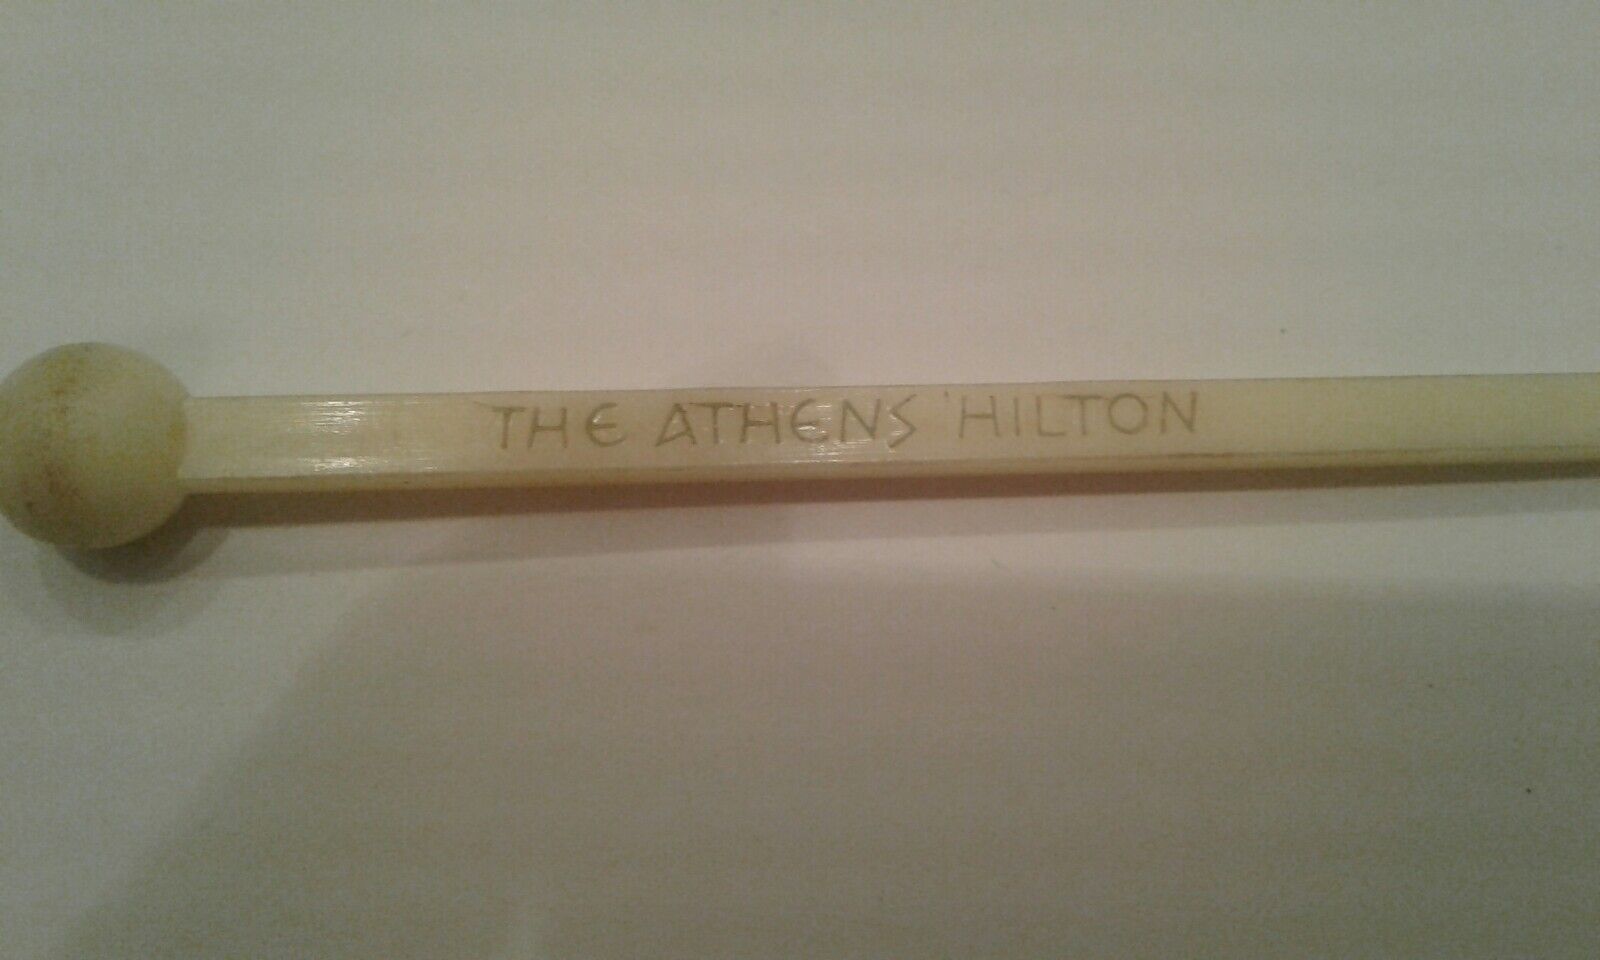 The ATHENS HILTON Swizzle Stick Drink Stirrer Greece White Plastic 